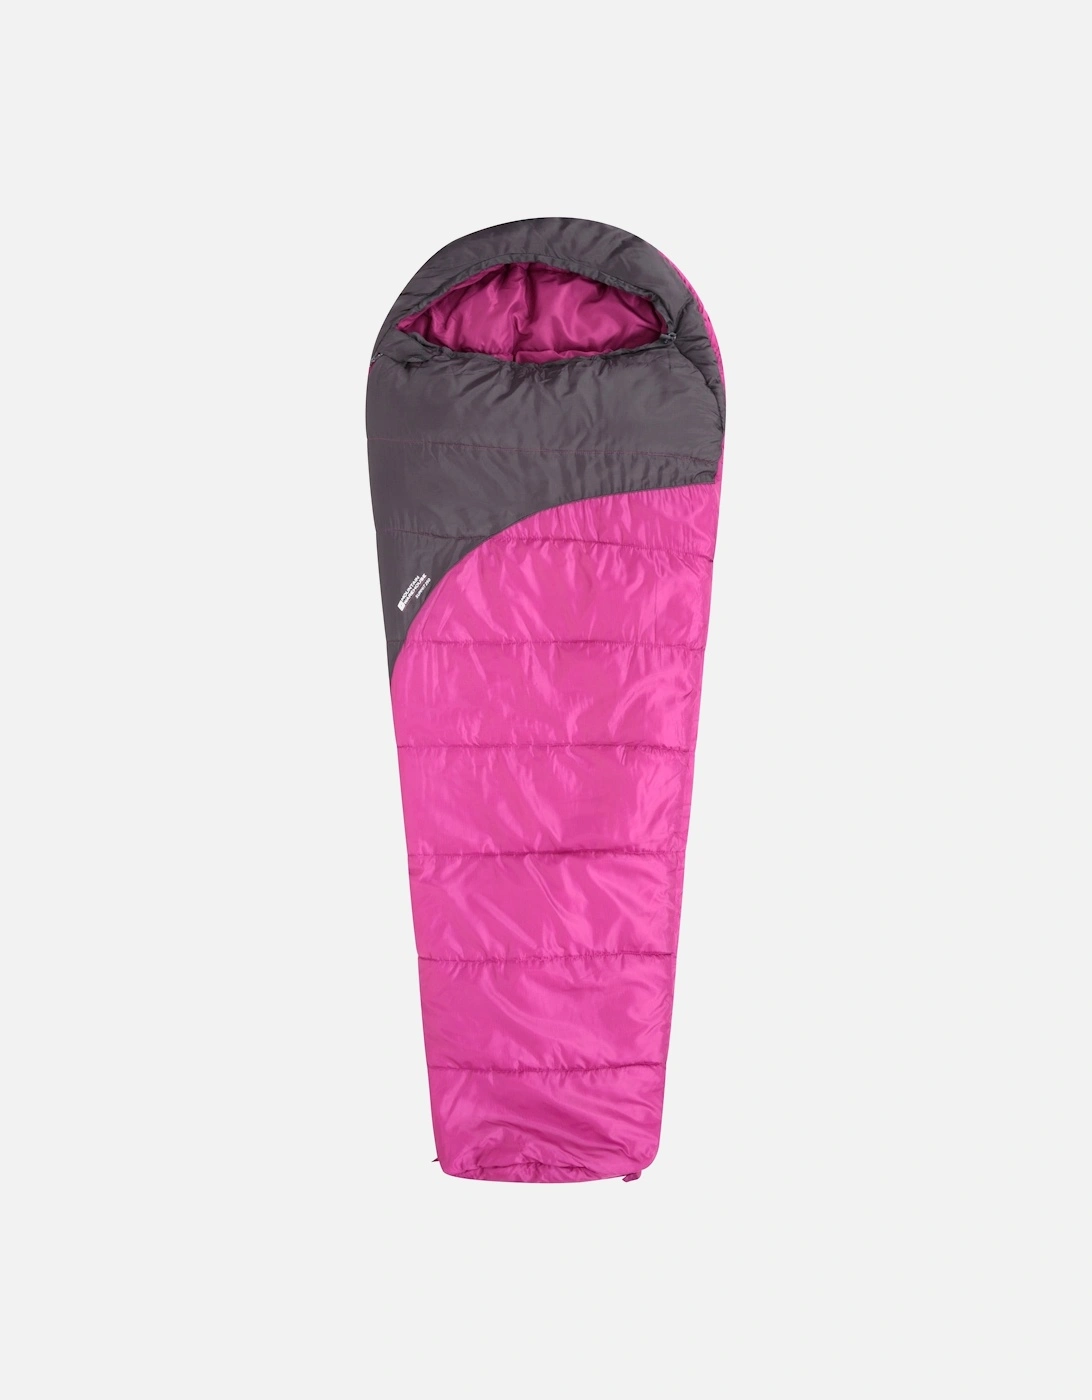 Unisex Adult Summit 250 Right Zip Winter Mummy Sleeping Bag